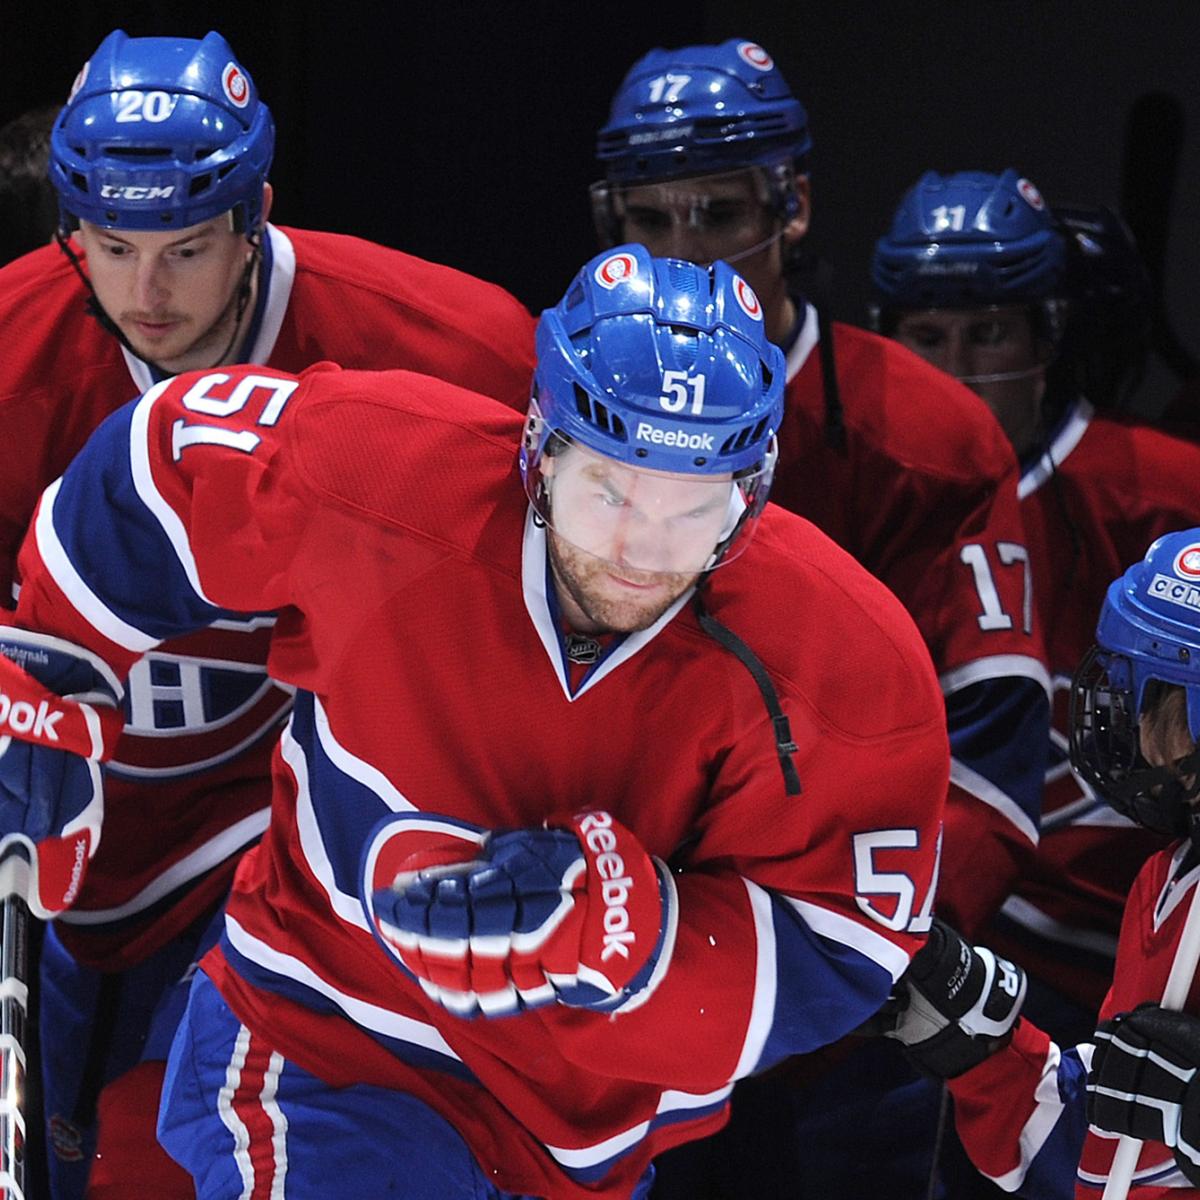 Leafs @ Canadiens - 01/19/2013 Season Opener Highlights 